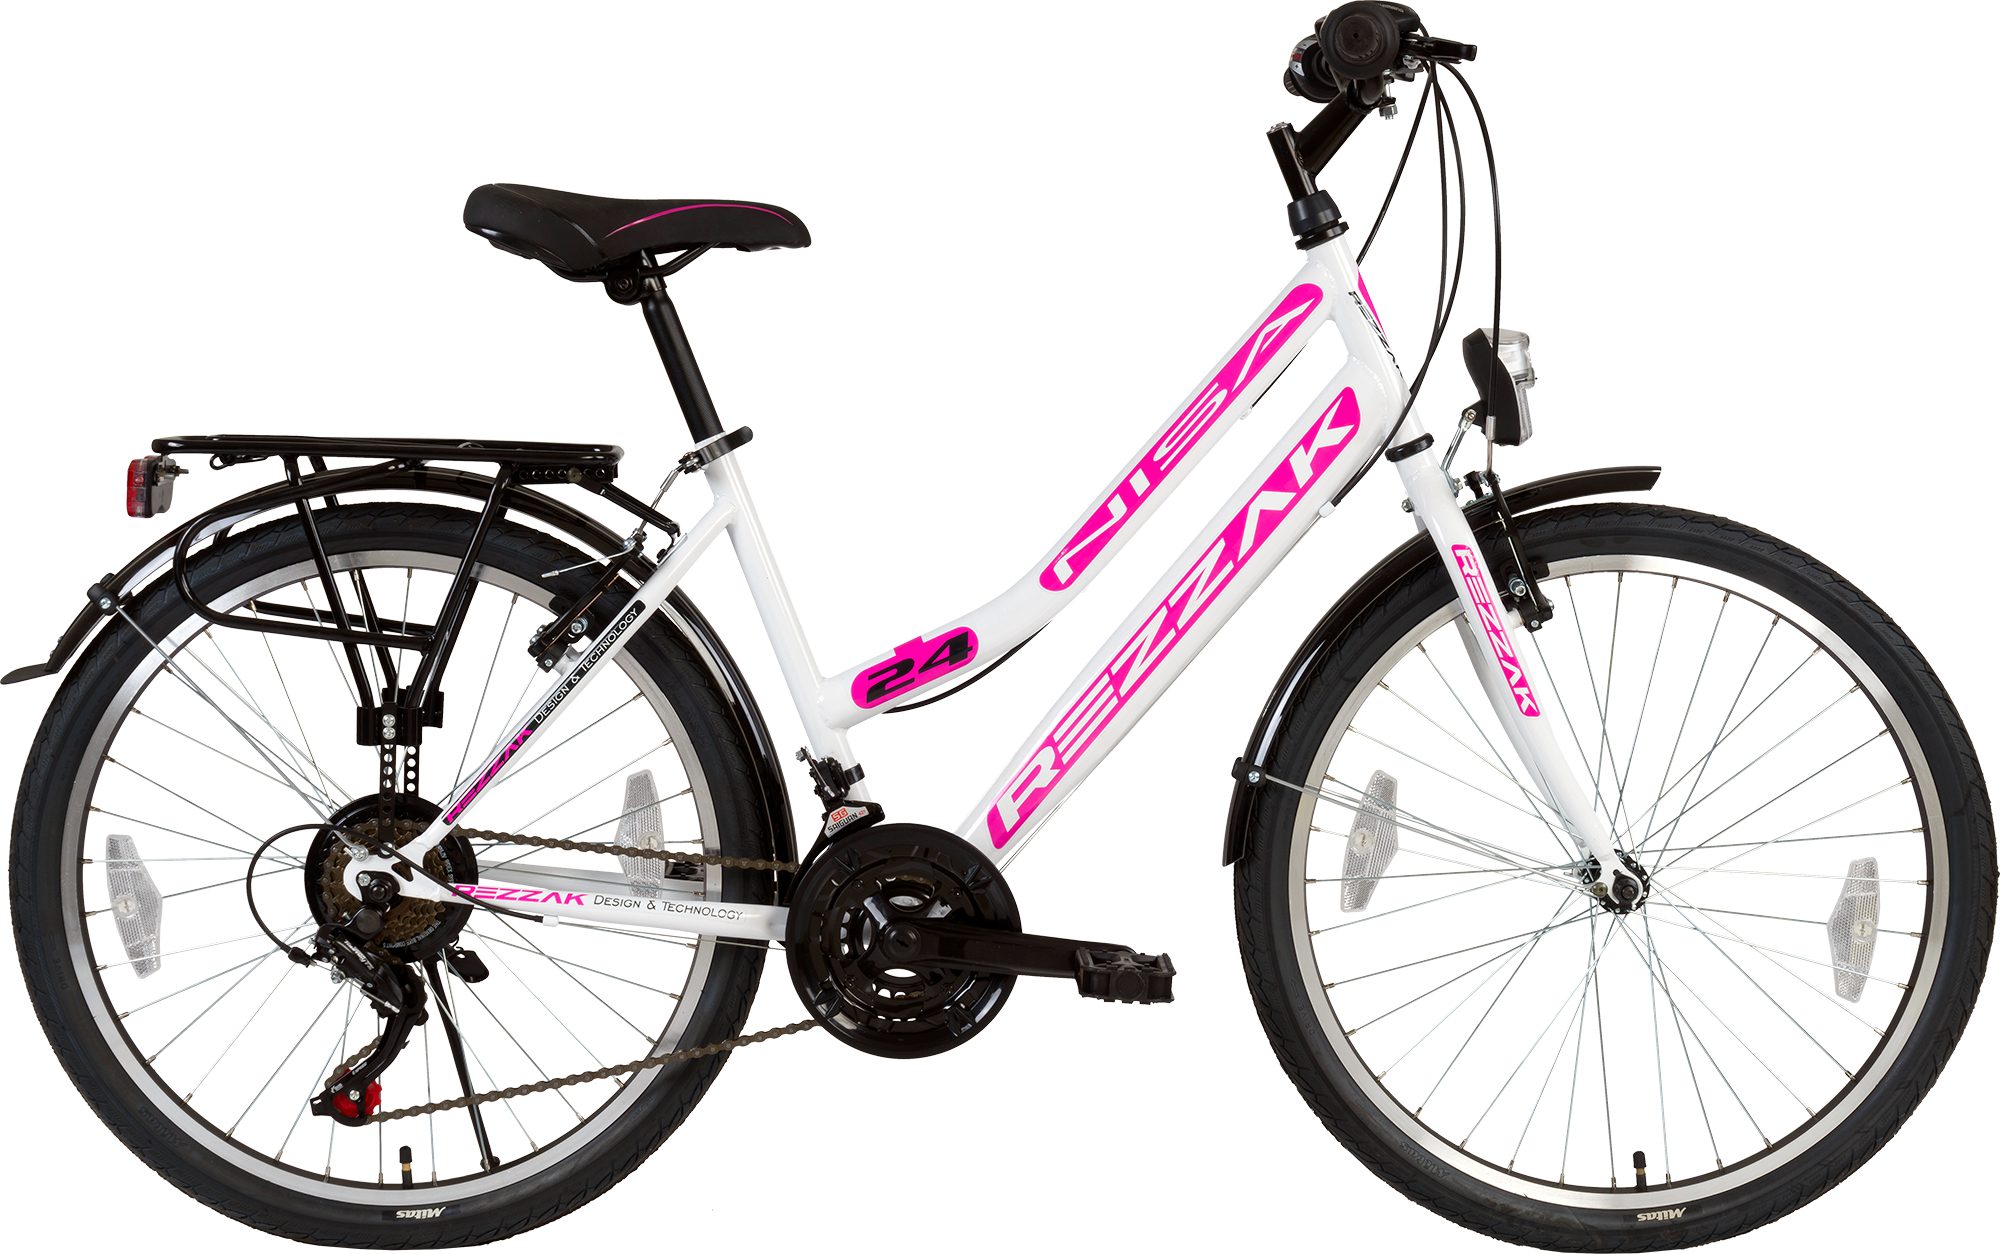 Rezzak Kinderfahrrad 24 Zoll Mädchen Fahrrad Kinder Fahrrad 21 Gang Shimano Weiss Pink, 21 Gang, Kettenschaltung